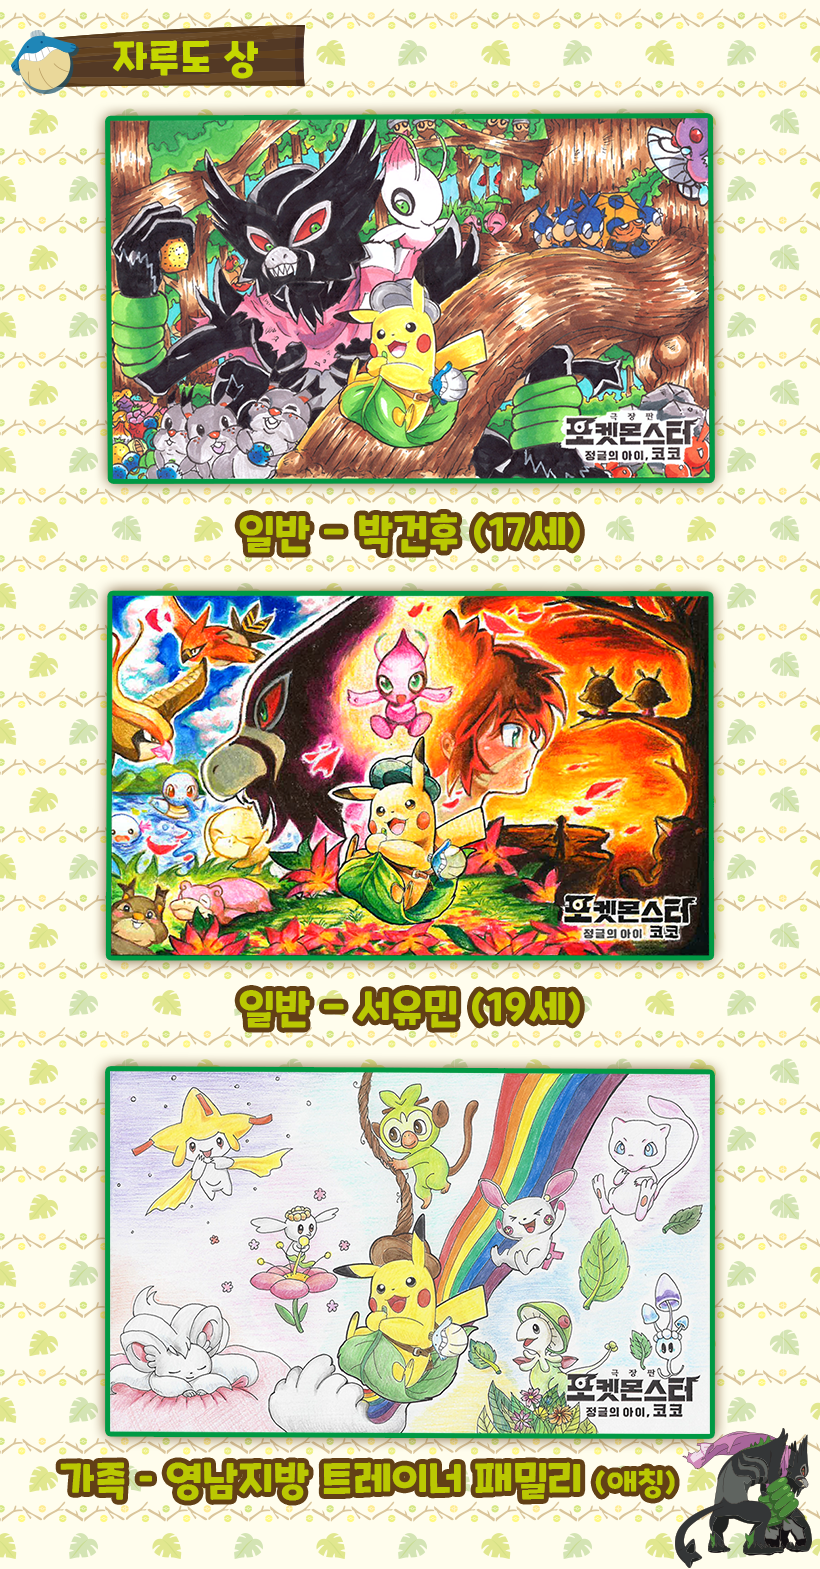 Pokémon Event Distribution News on X: The Korean distribution for Zarude,  Zarude (Dada), and Shiny Celebi has begun. Details:   / X